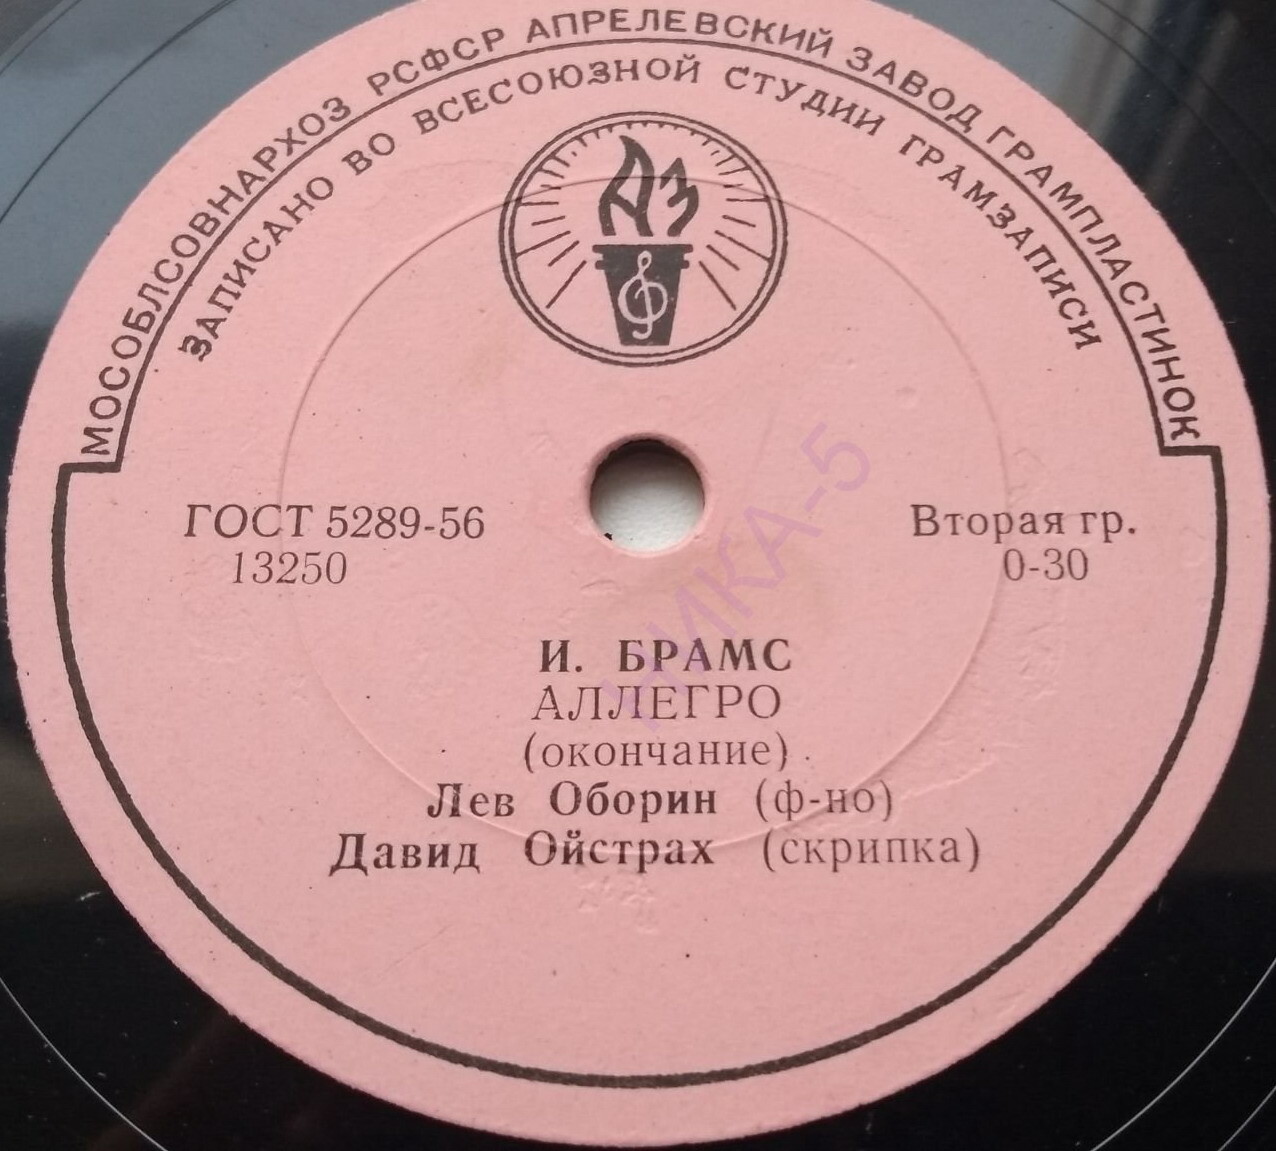 И. Брамс: Аллегро (Д. Ойстрах, скрипка; Л. Оборин, ф-но)